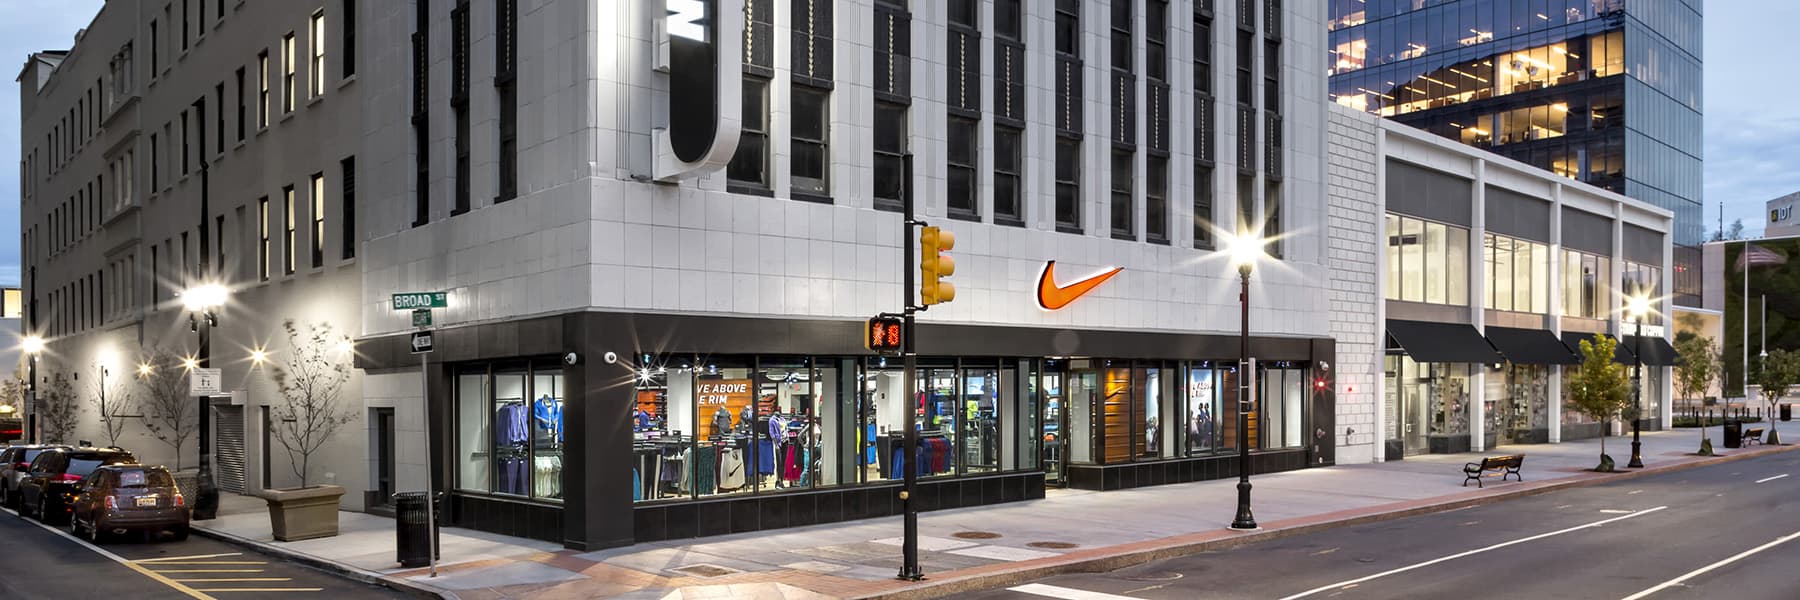 Ananiver profundizar apoyo Nike Factory Store - Newark. Newark, NJ. Nike.com